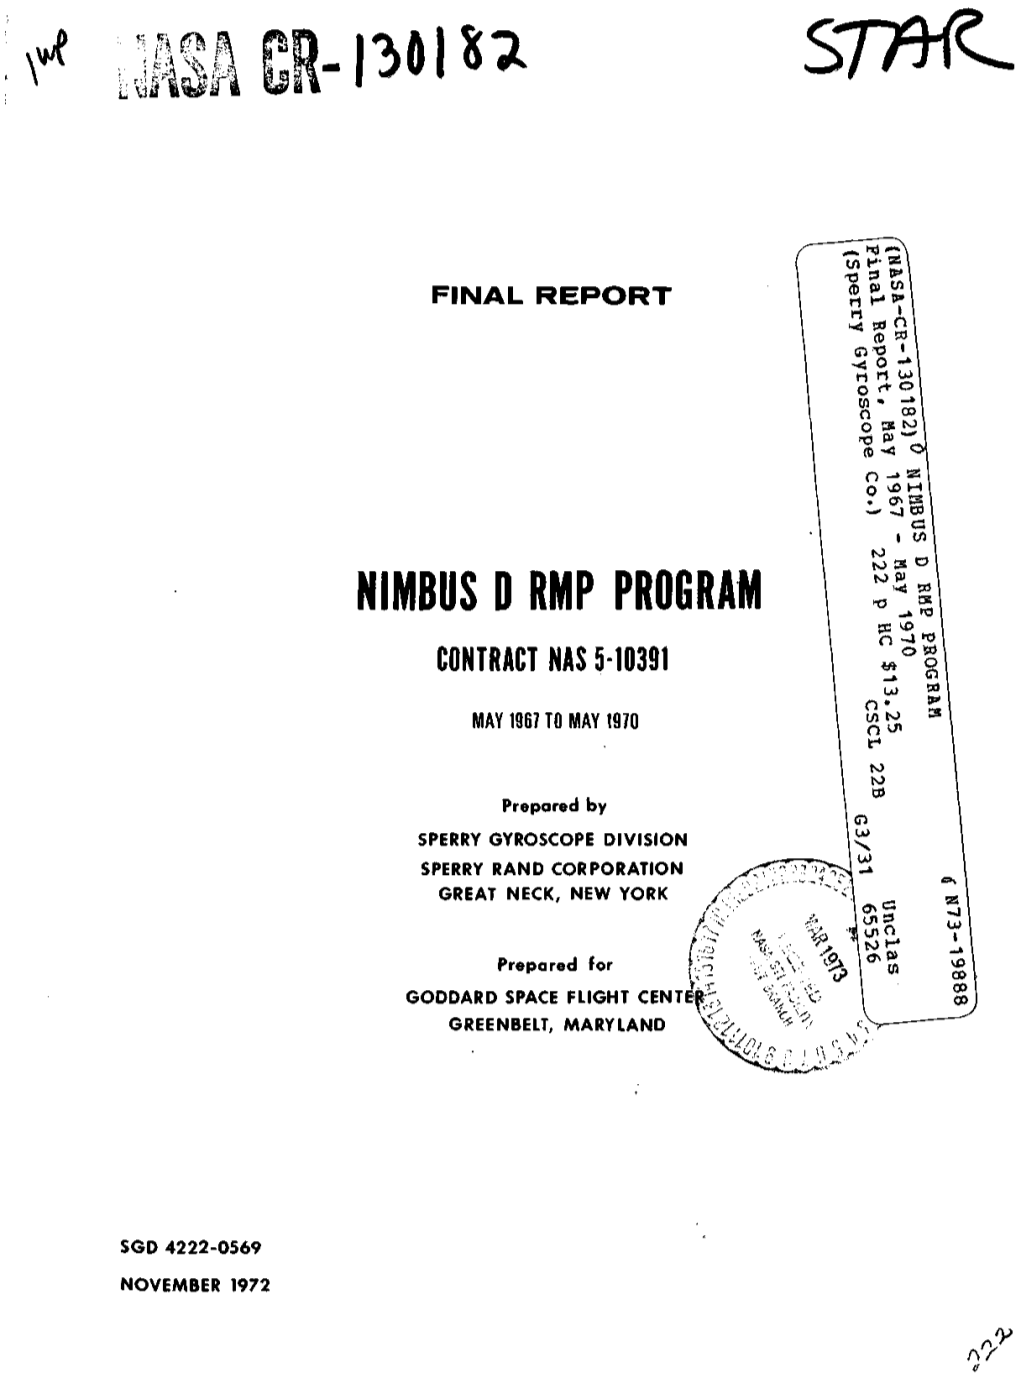 Nimbus D Rmp Program Contract Nas 5-10391